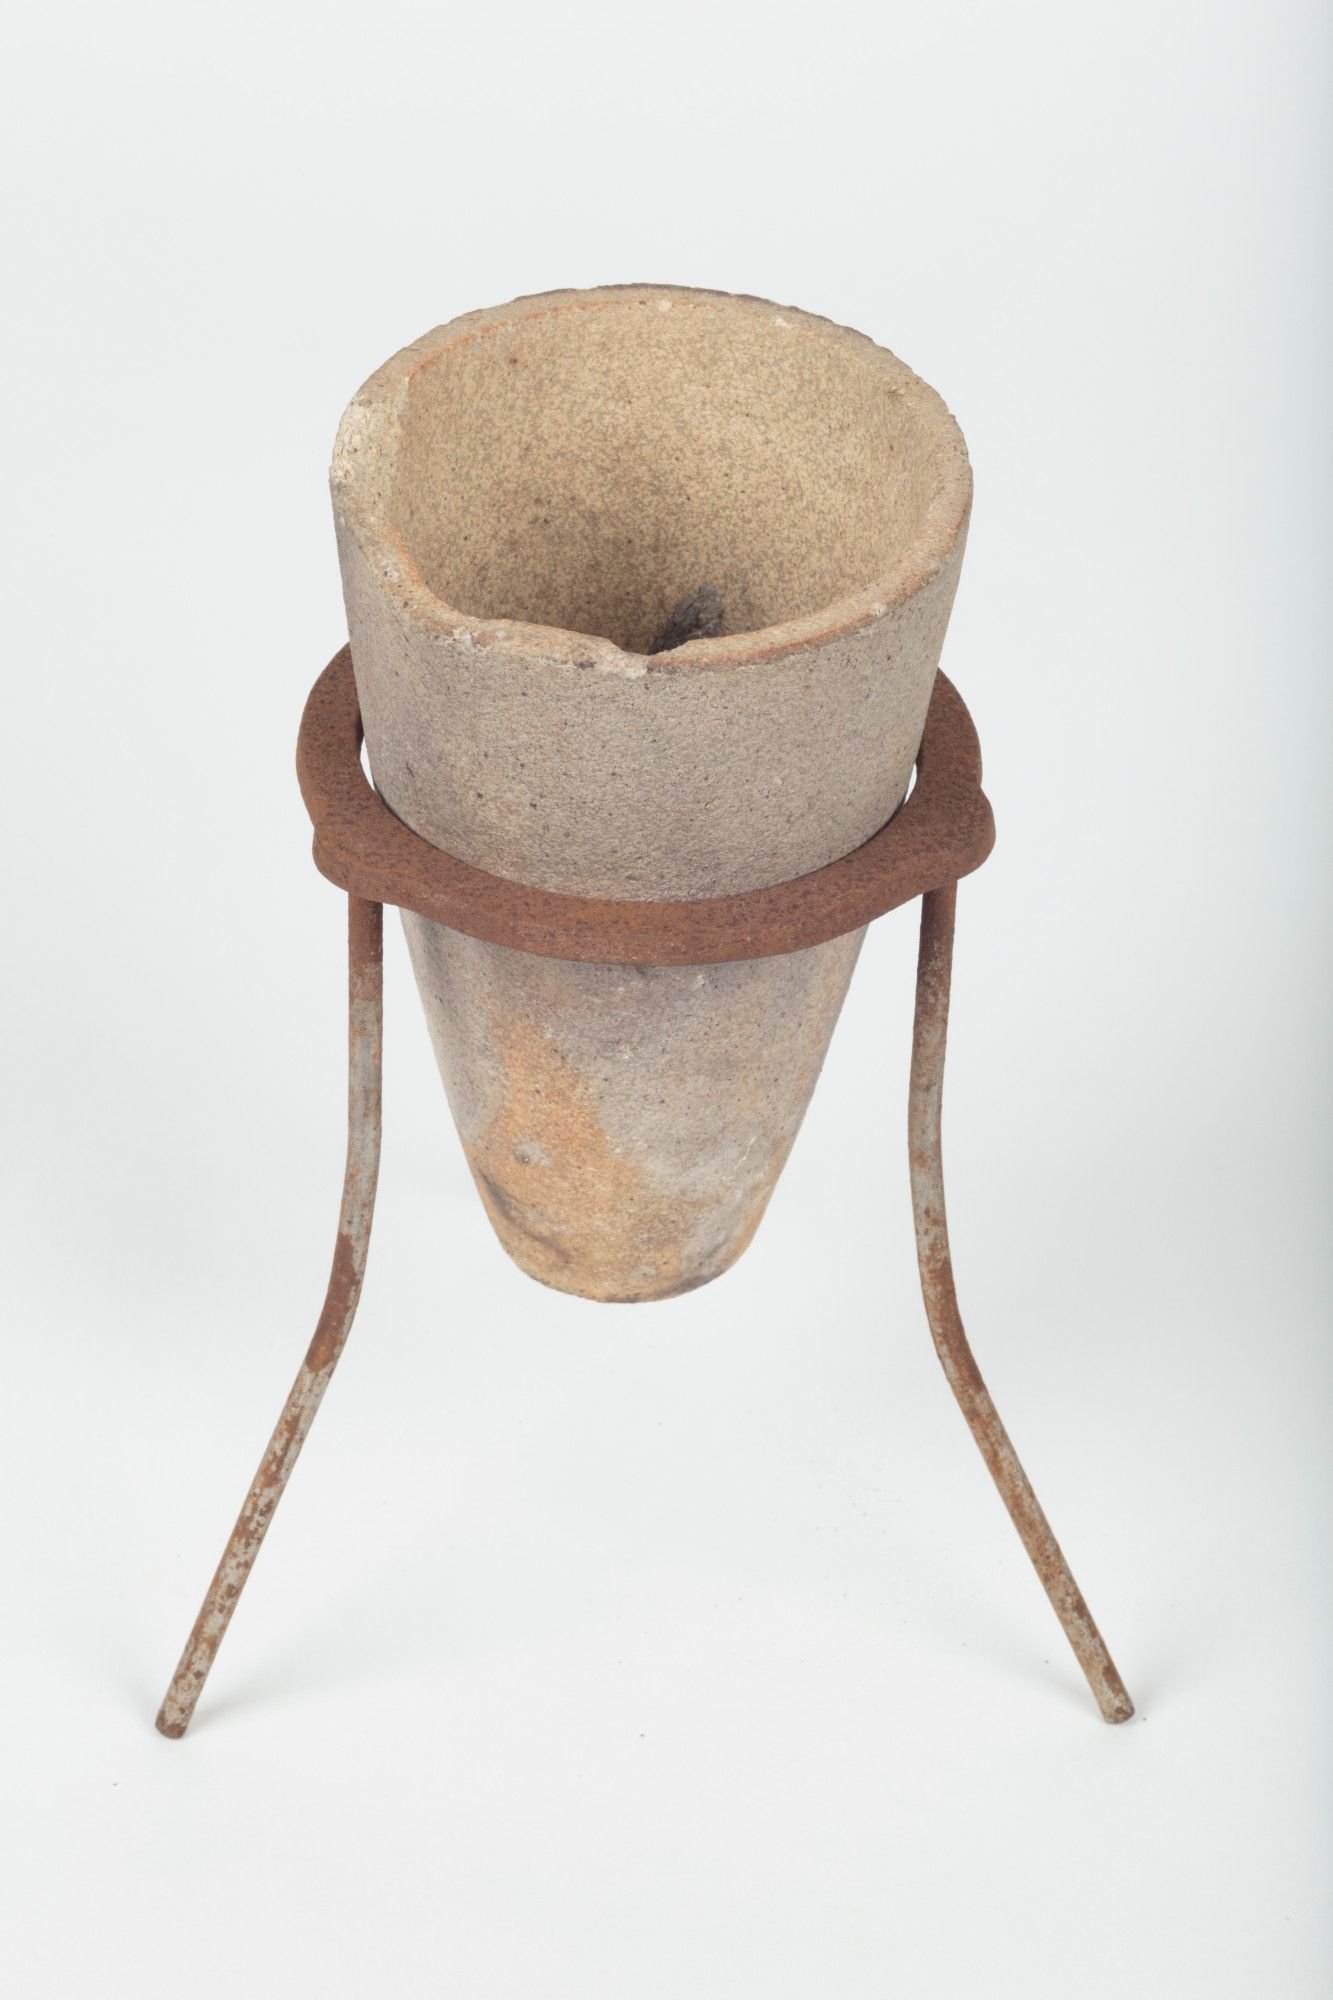 A small deep terracotta pot sits on a tripod